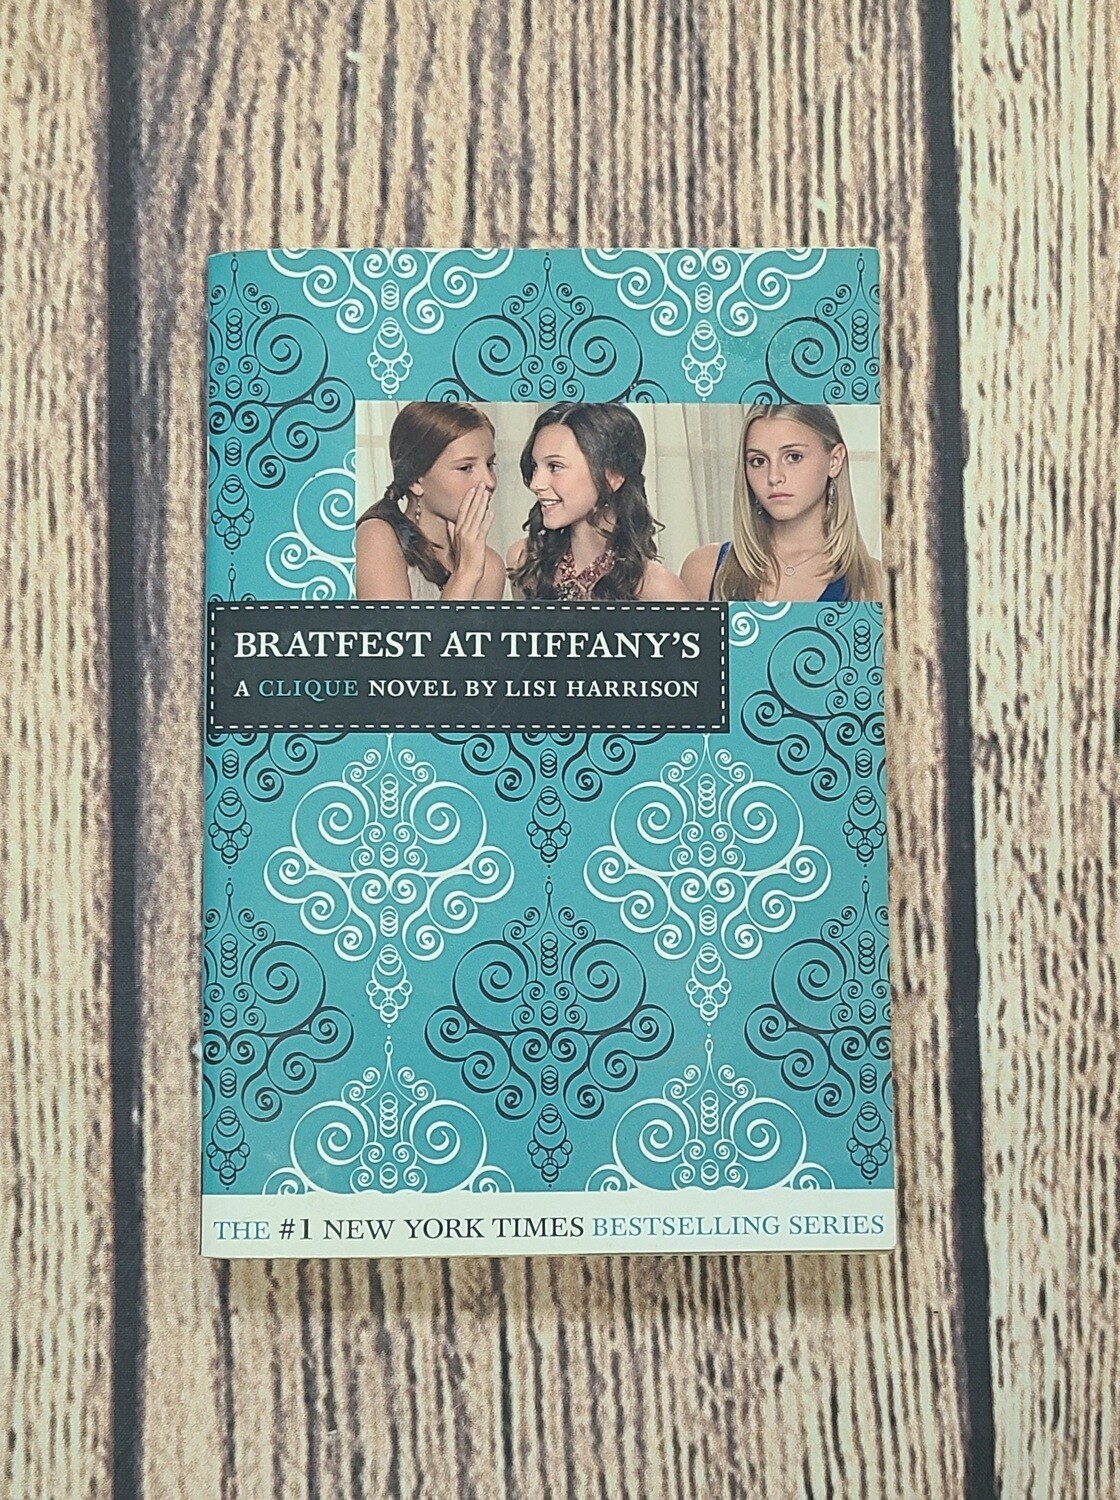 Bratfest at Tiffany's by Lisi Harrison